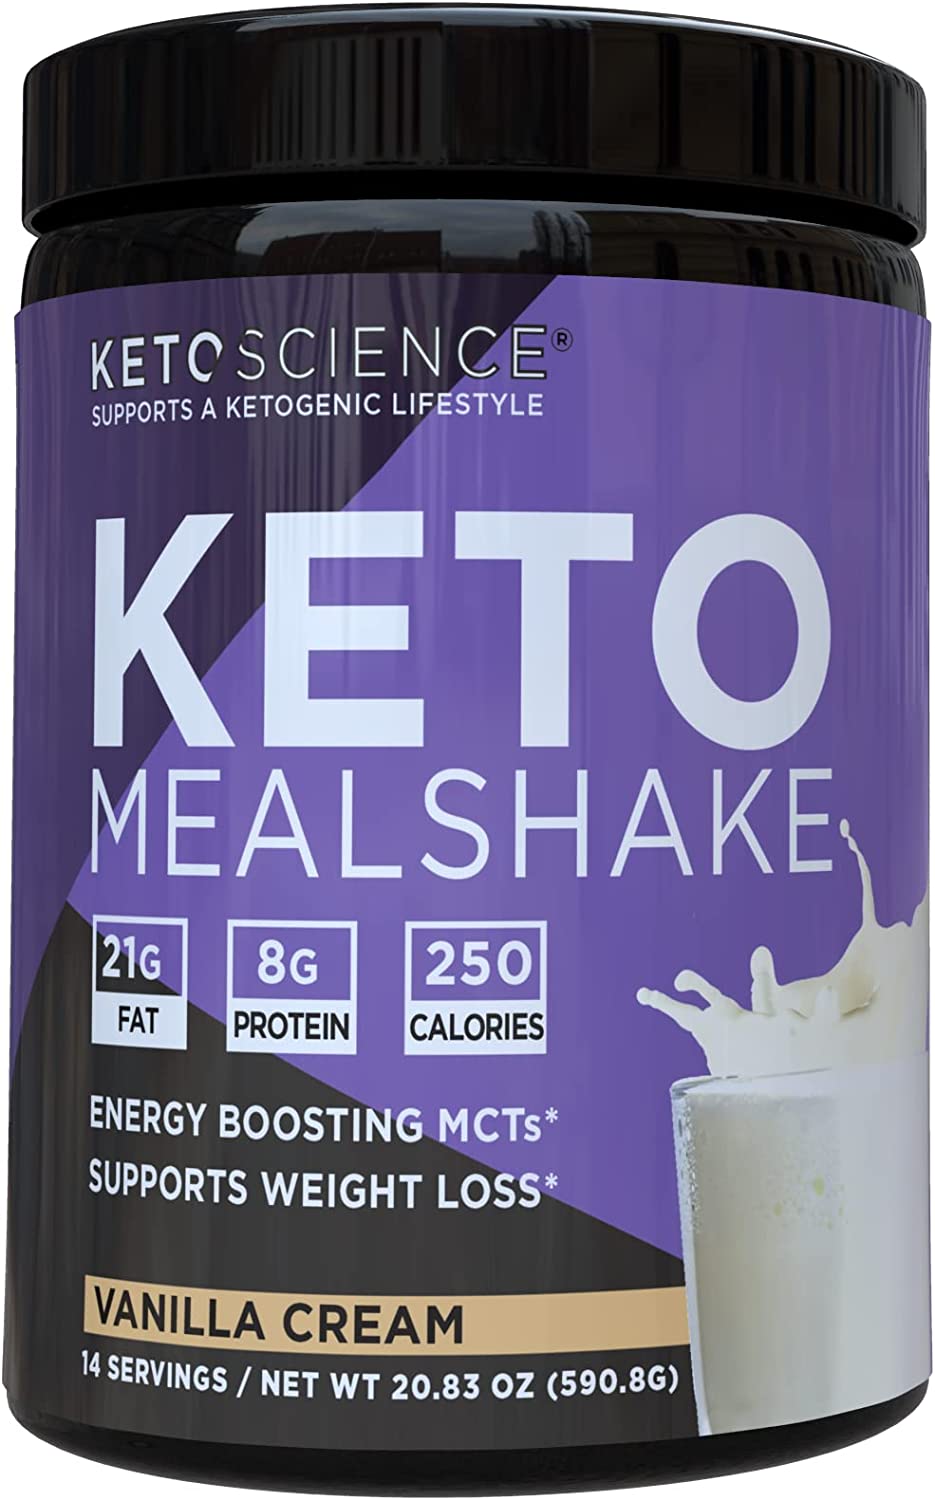 Keto Science Vanilla Cream Meal Shake 14 Servings